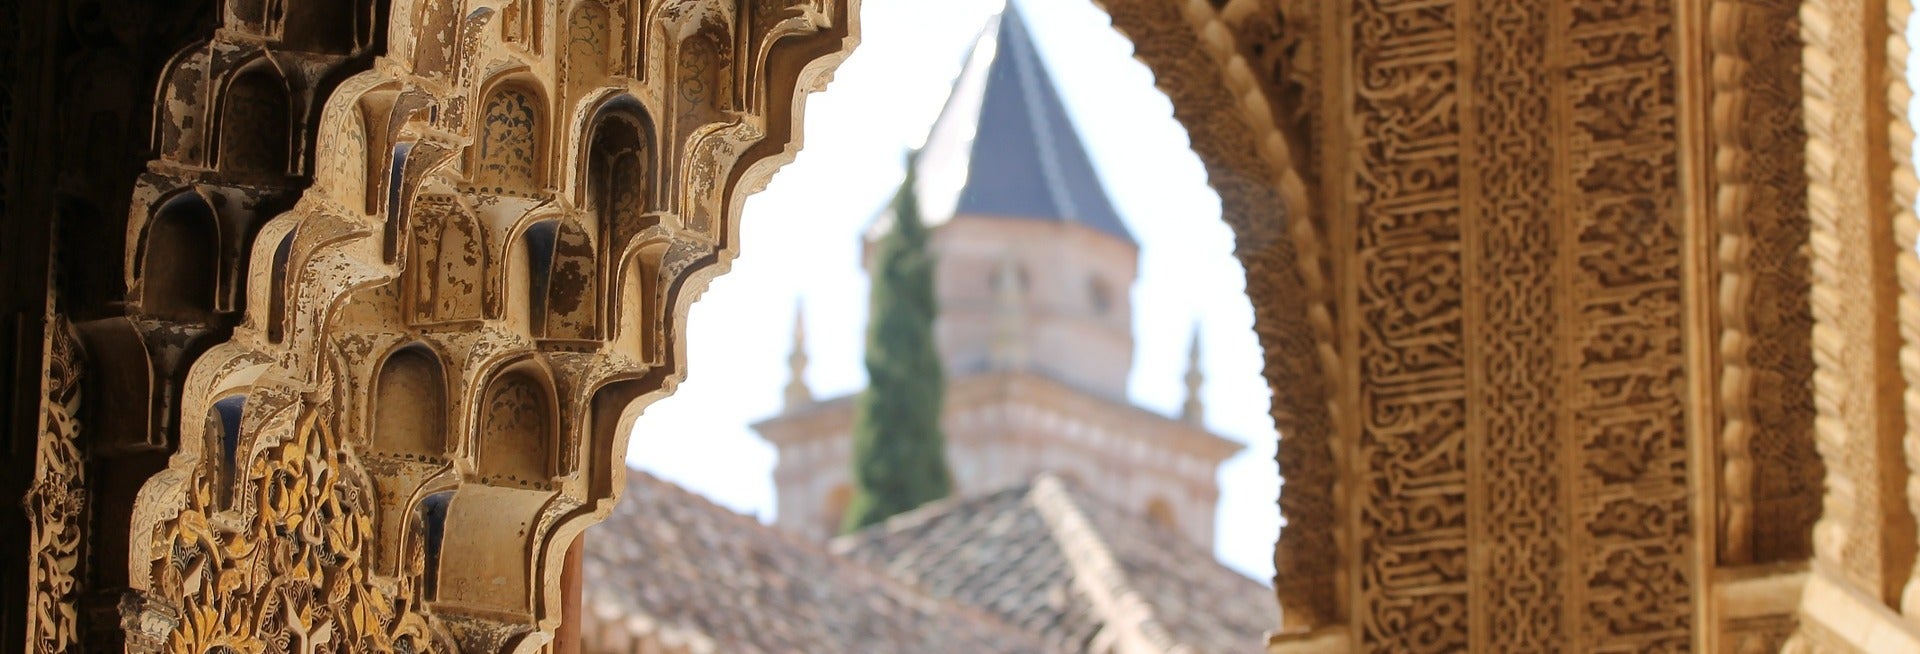 Offerta: Alhambra + Albayzín e Sacromonte